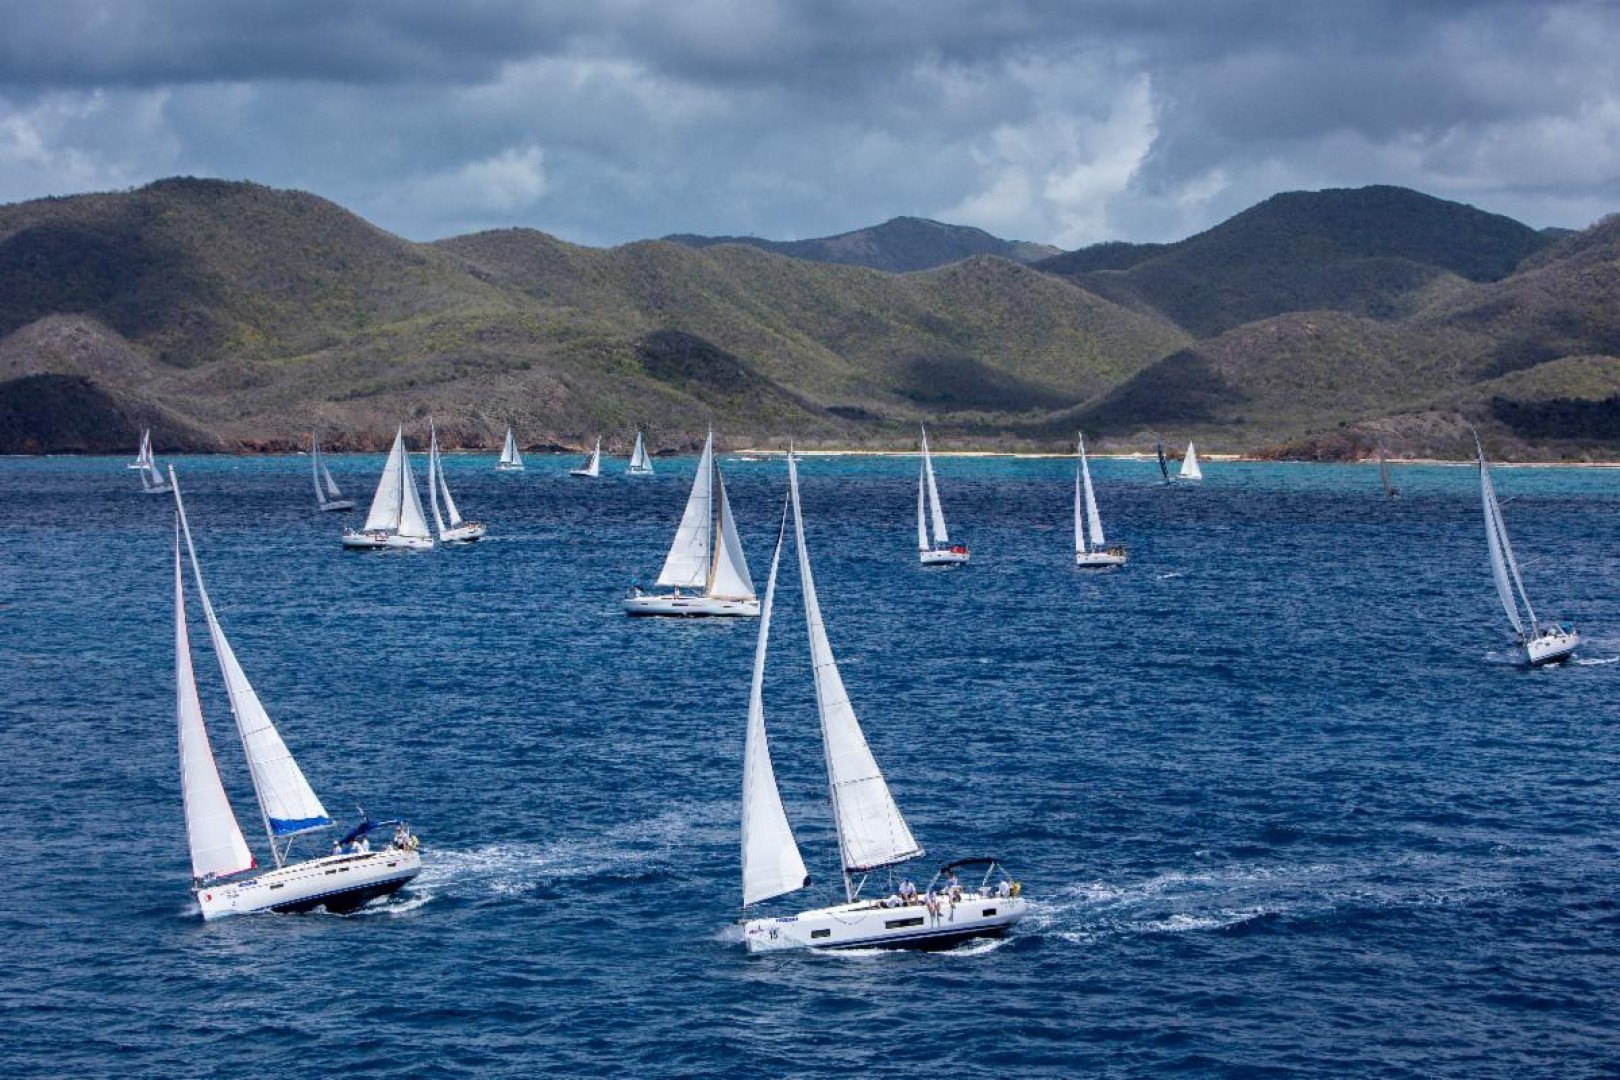 With 29 entries, Antigua Sailing Week has seen the largest Bareboat fleet of the 2022 Caribbean regatta season